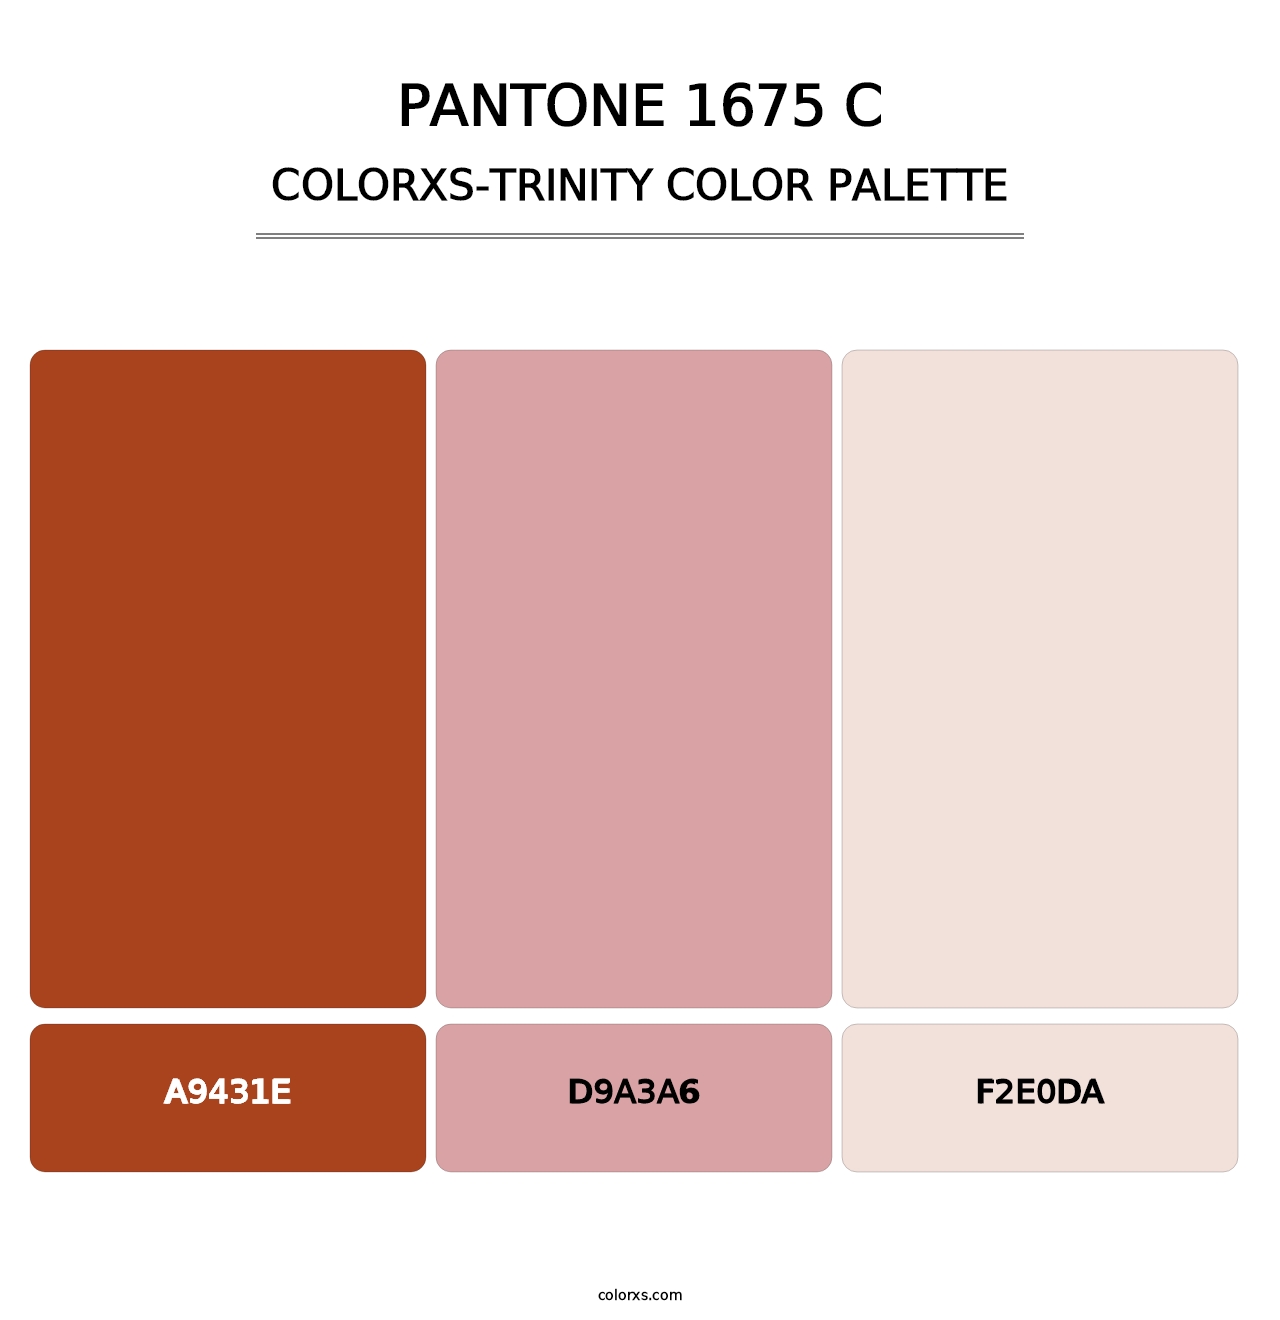 PANTONE 1675 C - Colorxs Trinity Palette